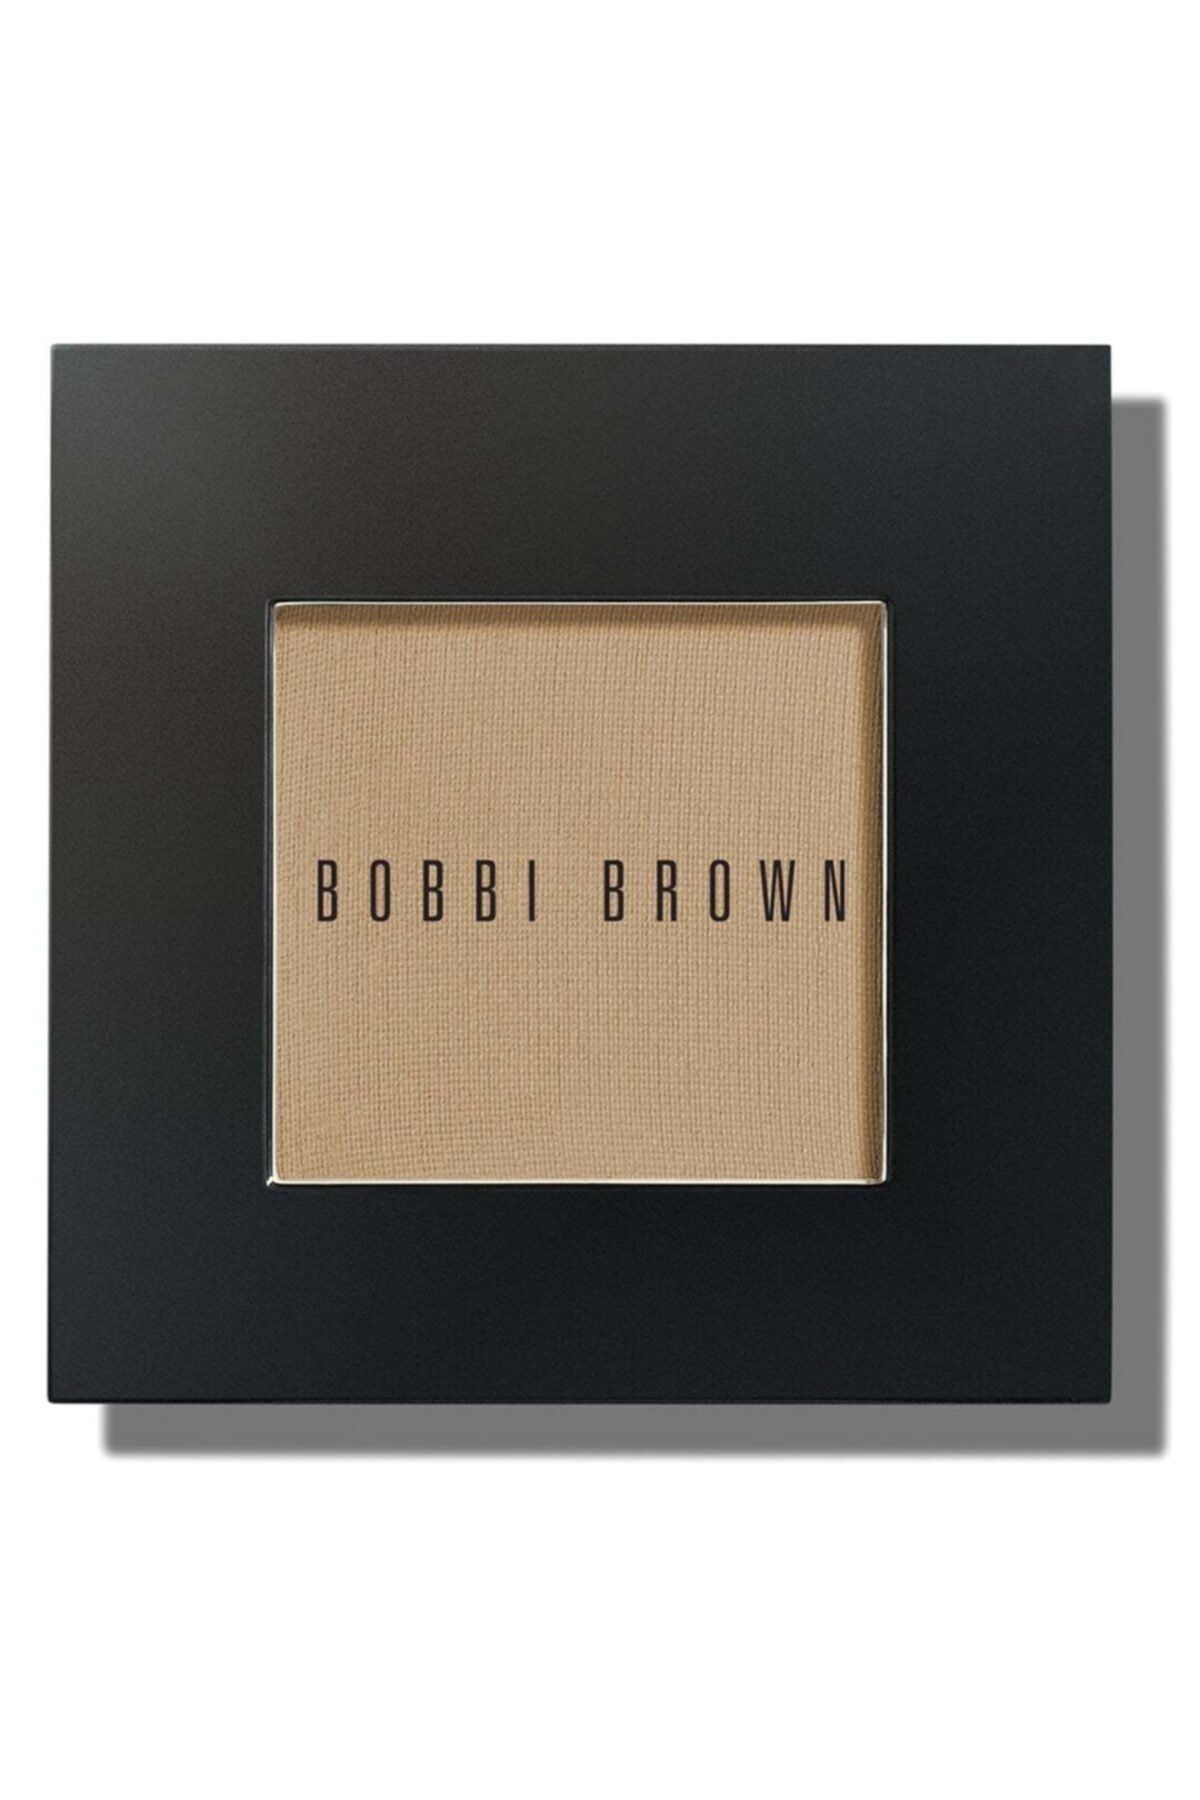 Bobbi Brown Eye Shadow / Göz Farı 2.5 G Banana (03) 716170058528